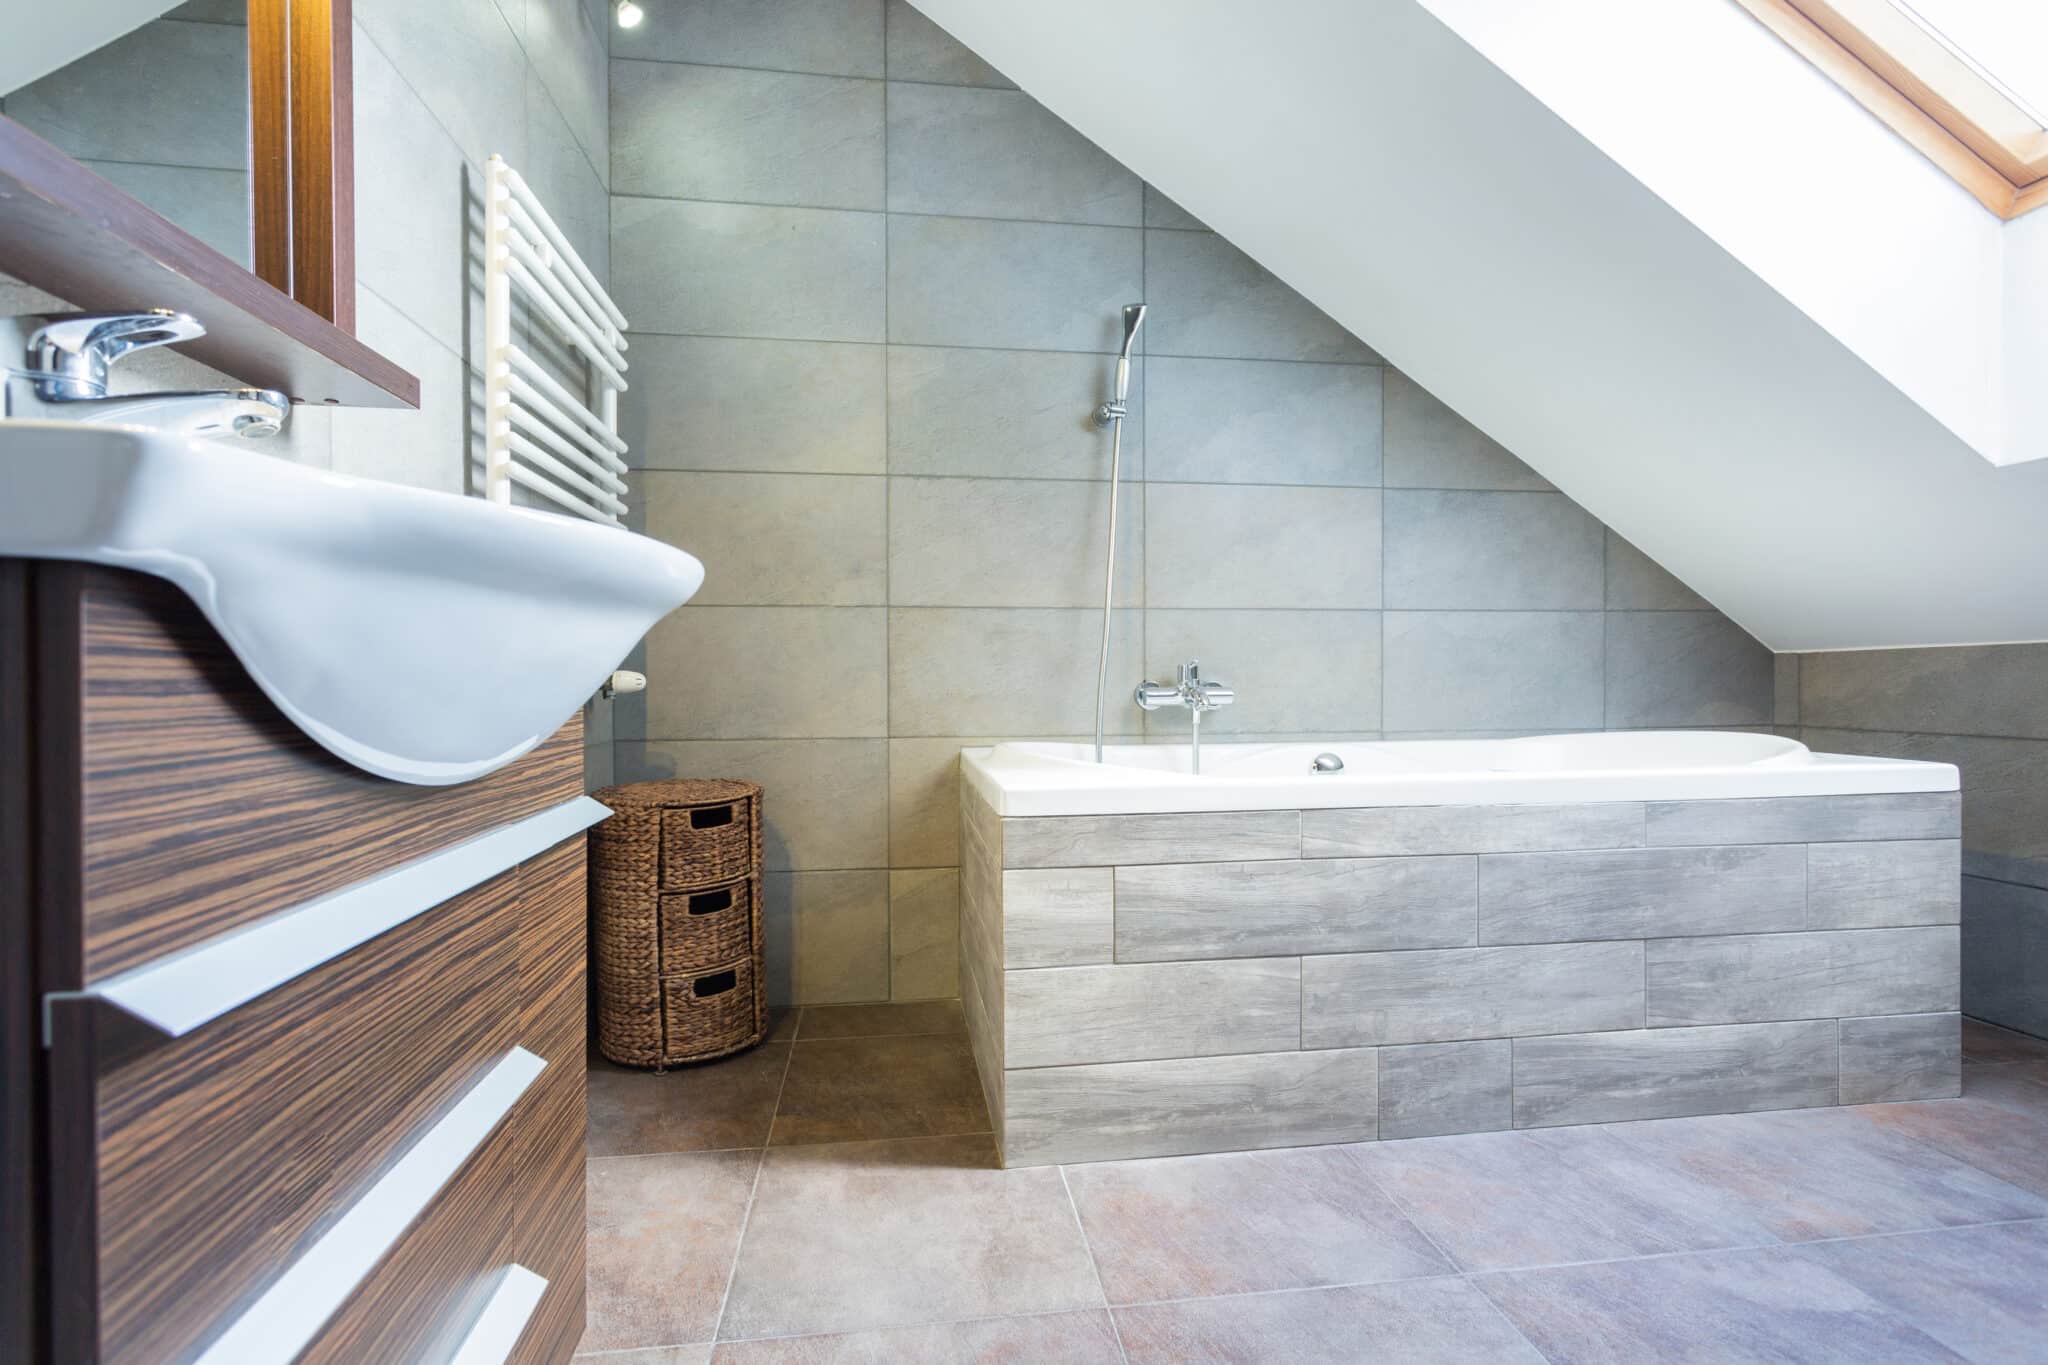 Attic bathroom skylight tub tile floor walls showerhead mirror drawer